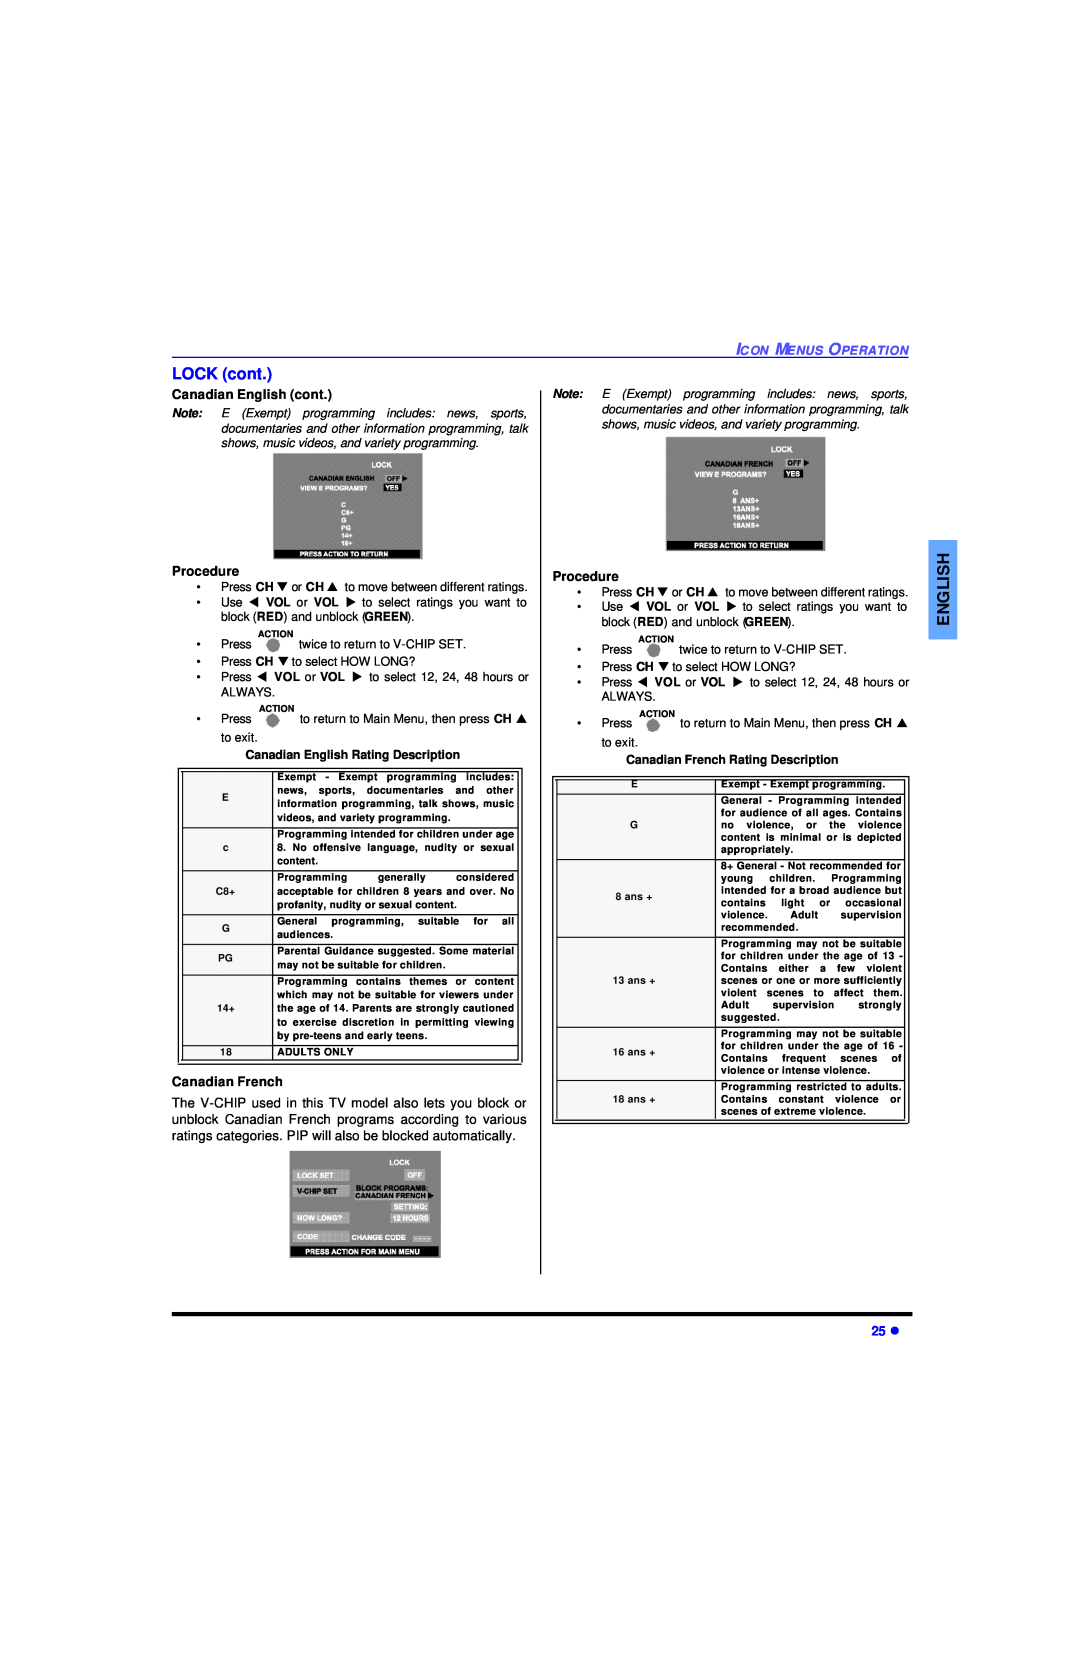 Panasonic CT 32HL43 manuel dutilisation LOCK cont, Canadian English Rating Description, Icon Menus Operation 